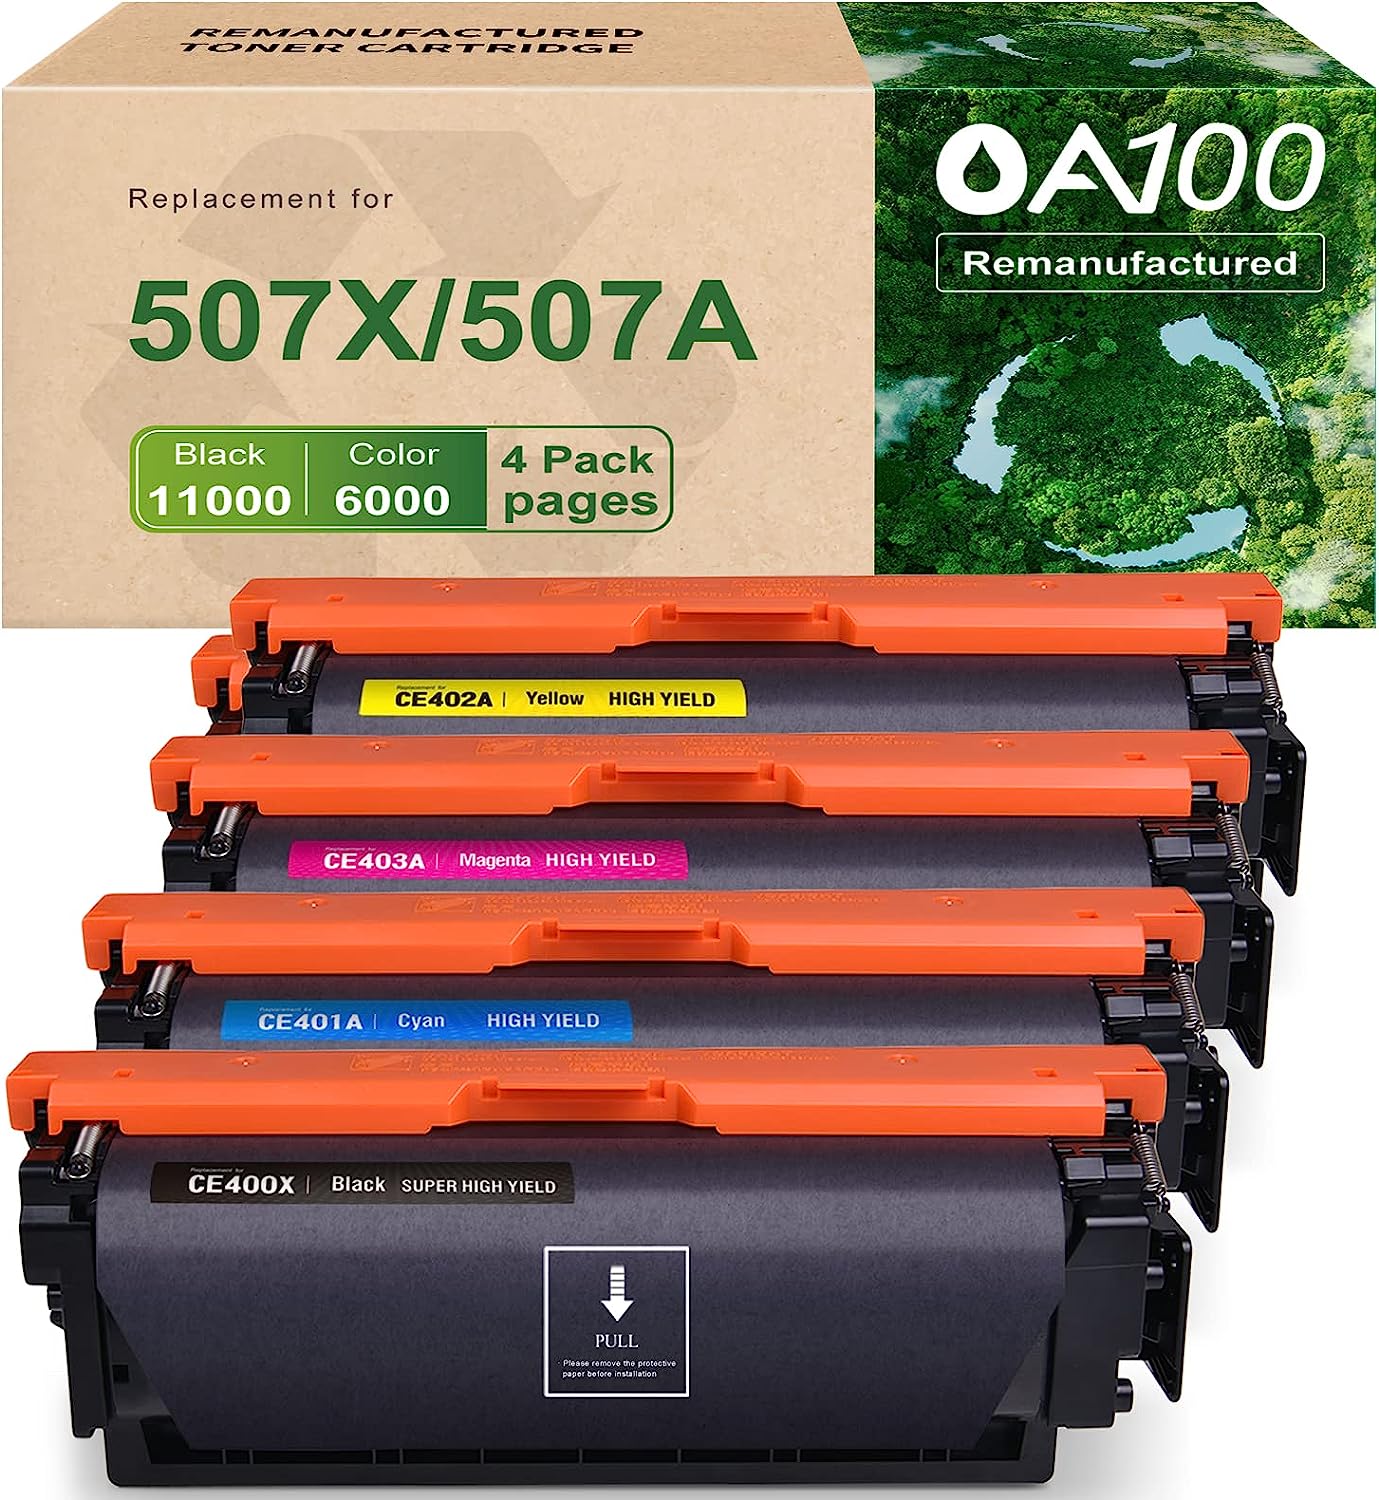 Remanufactured HP 507X 507A Toner Cartridge OA100 (Black Cyan Magenta Yellow,4-Pack) - Linford Office:Printer Ink & Toner Cartridge